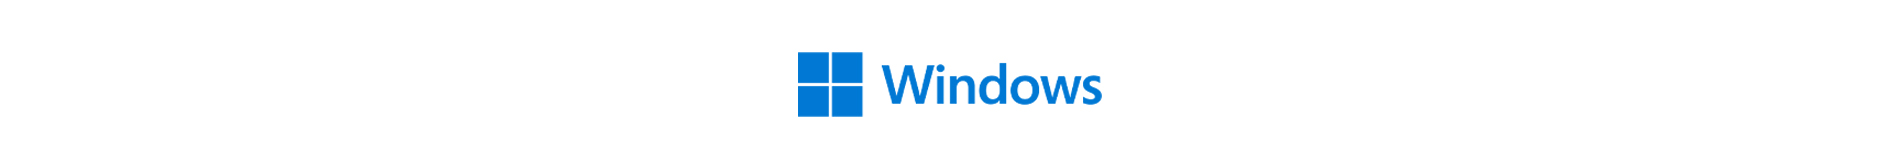 Windows ModernPCs Save180 10.28.21windows Logo